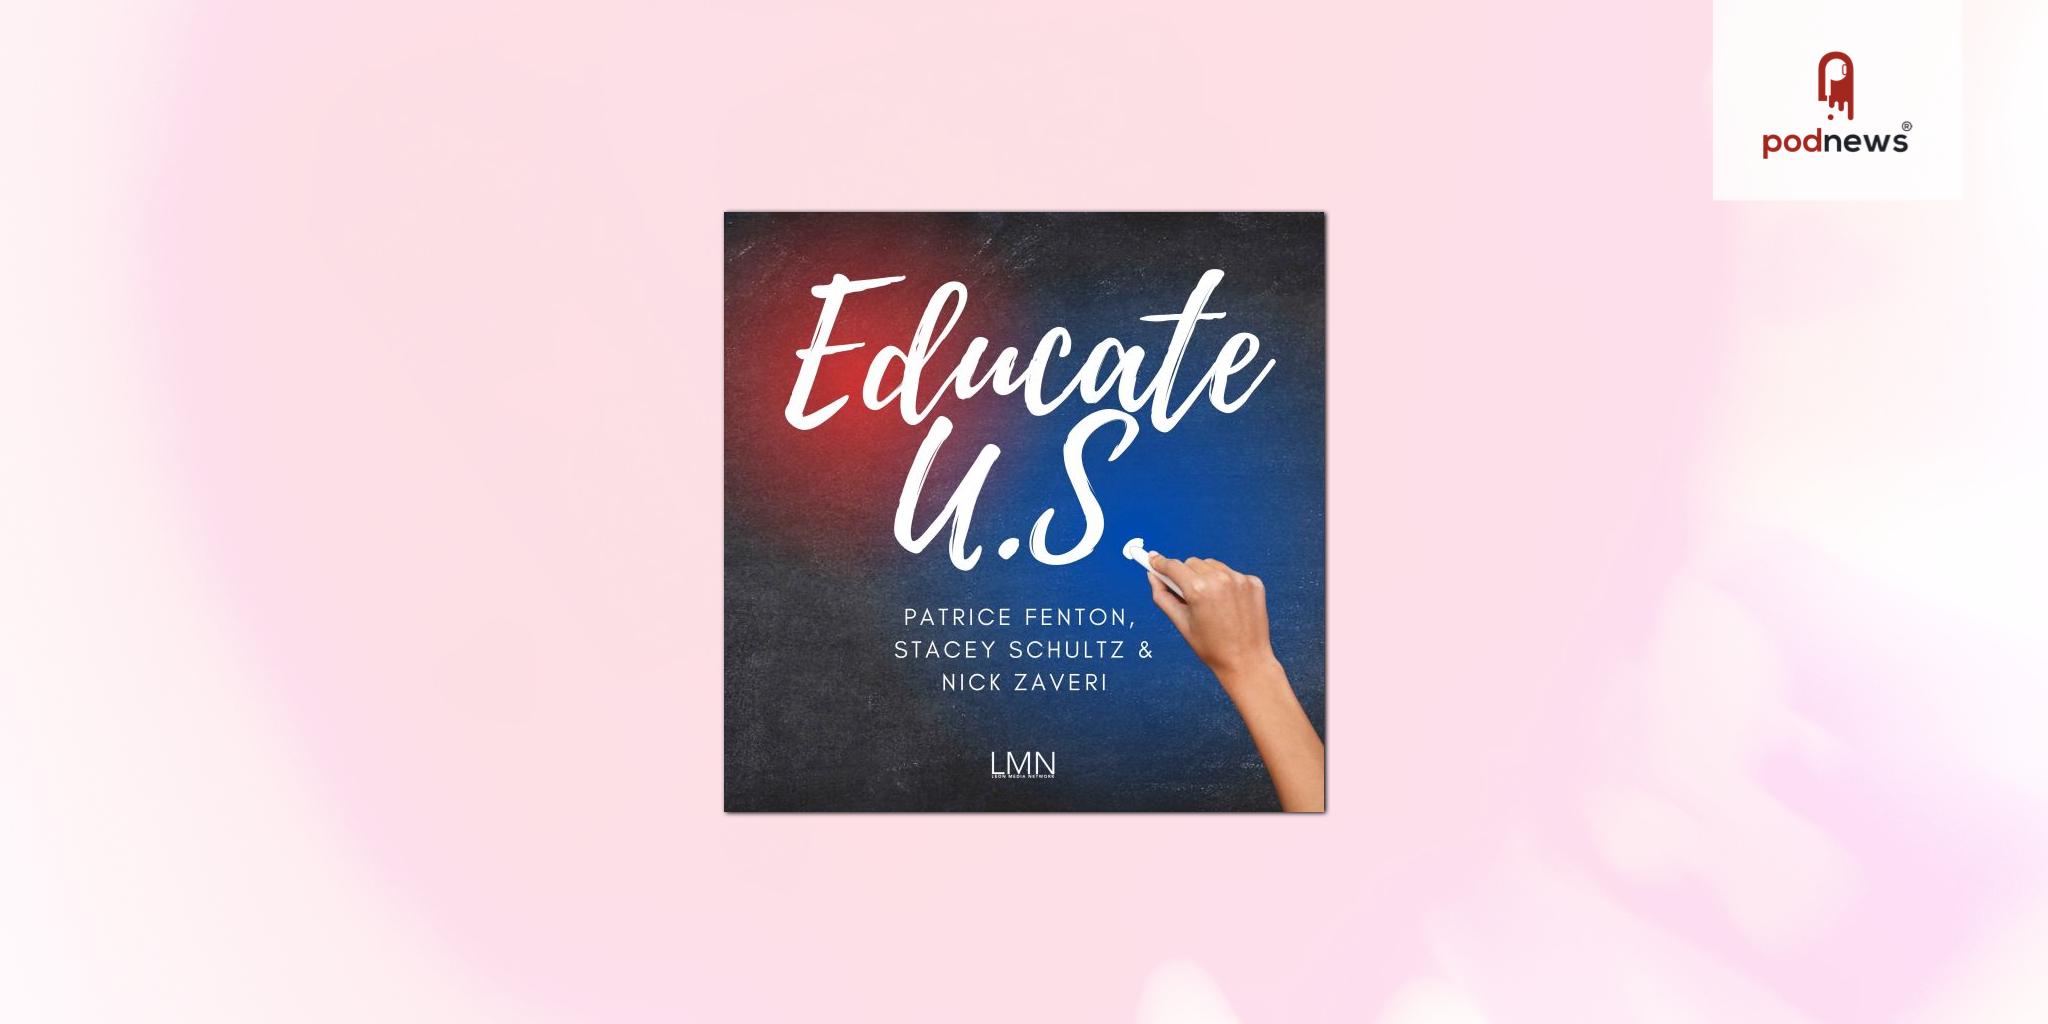 Leon Media Network launches Educate U.S. Podcast